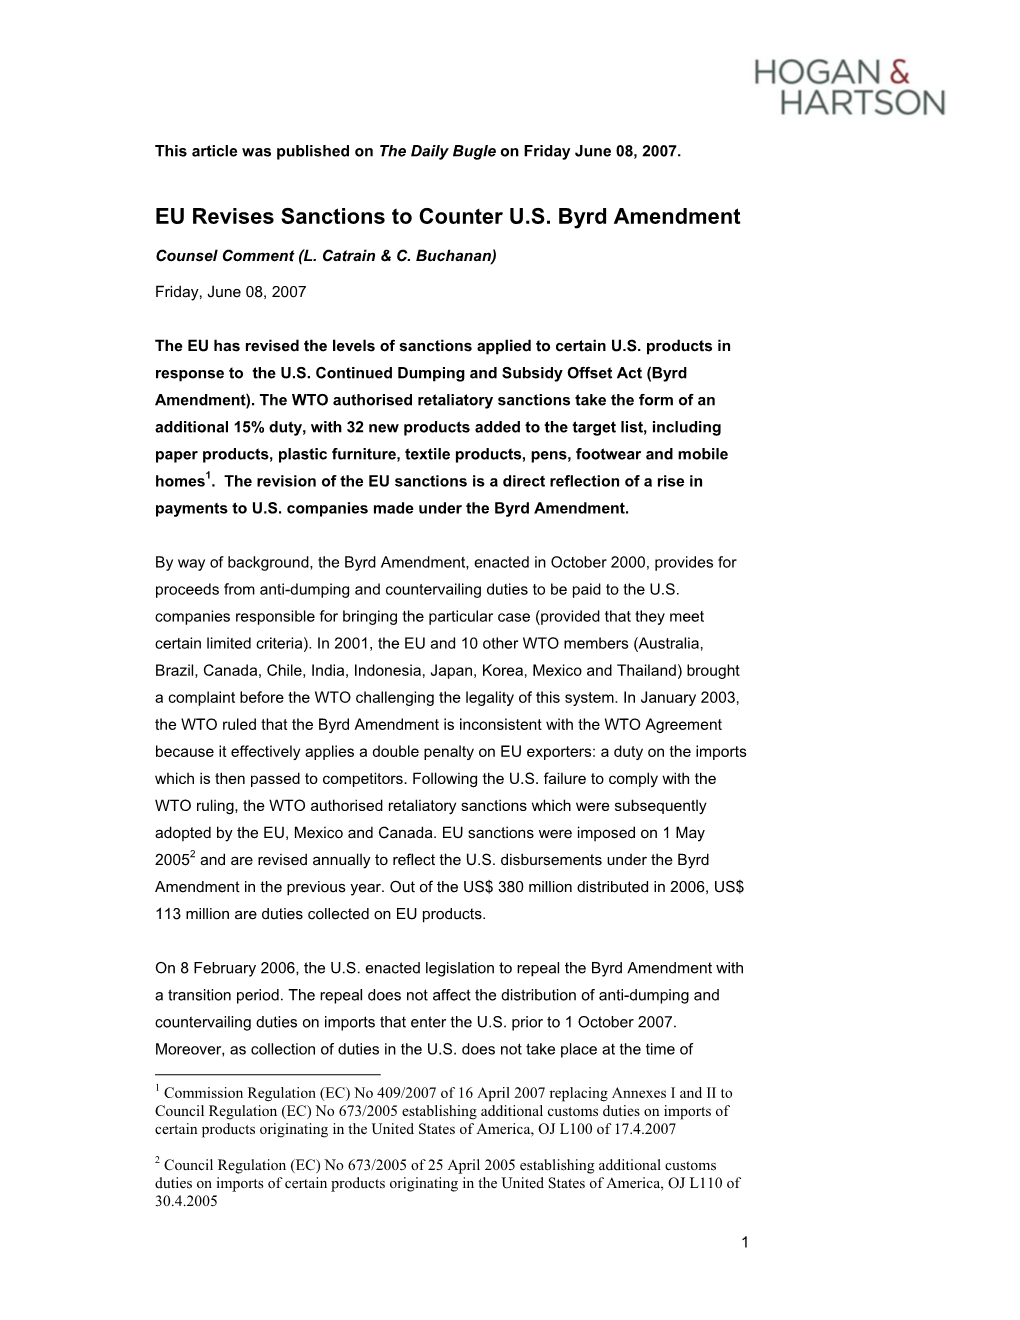 EU Revises Sanctions to Counter US Byrd Amendment